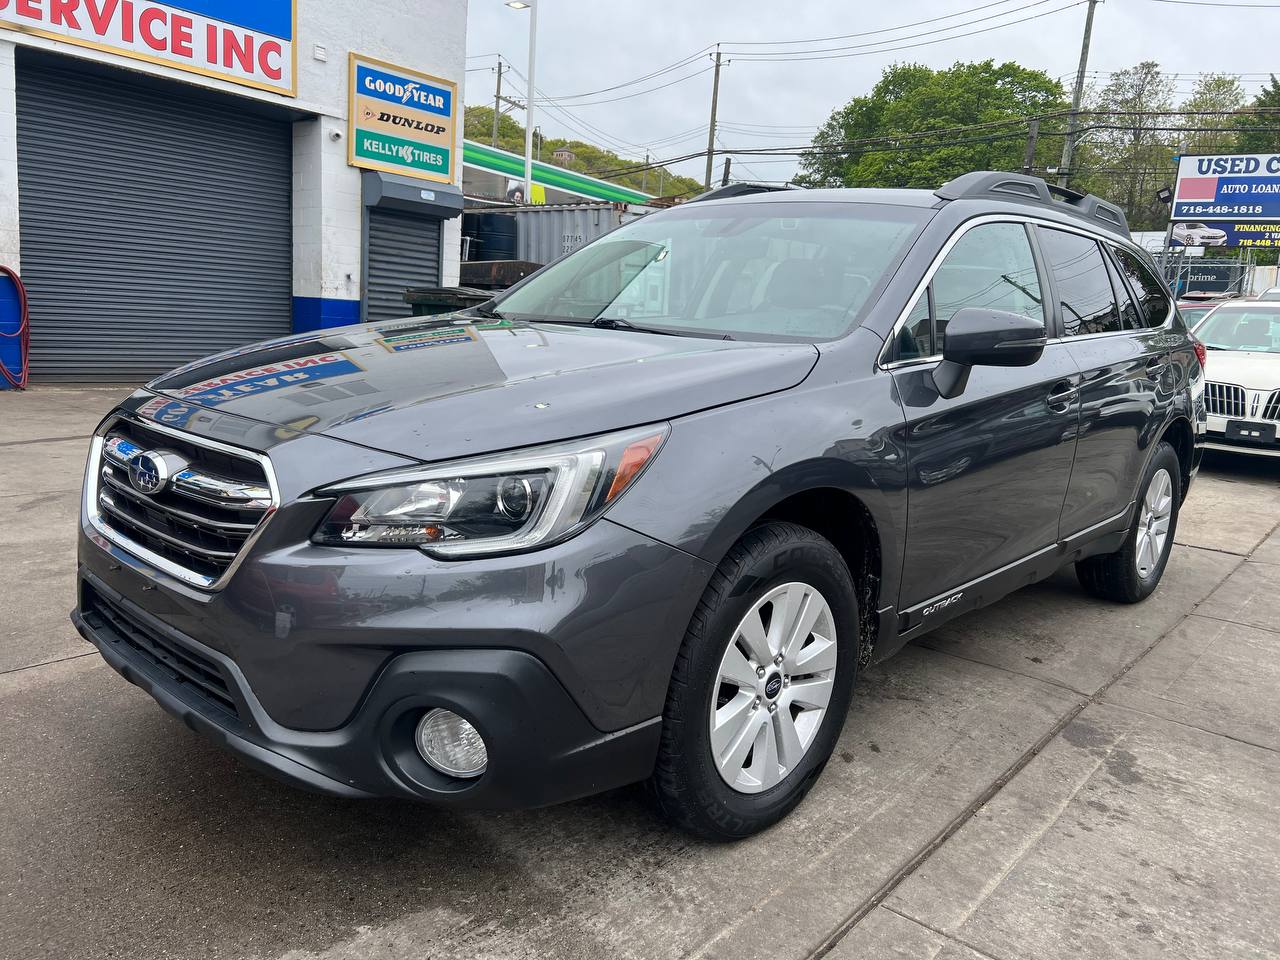 Used Car - 2019 Subaru Outback 2.5i Premium for Sale in Staten Island, NY